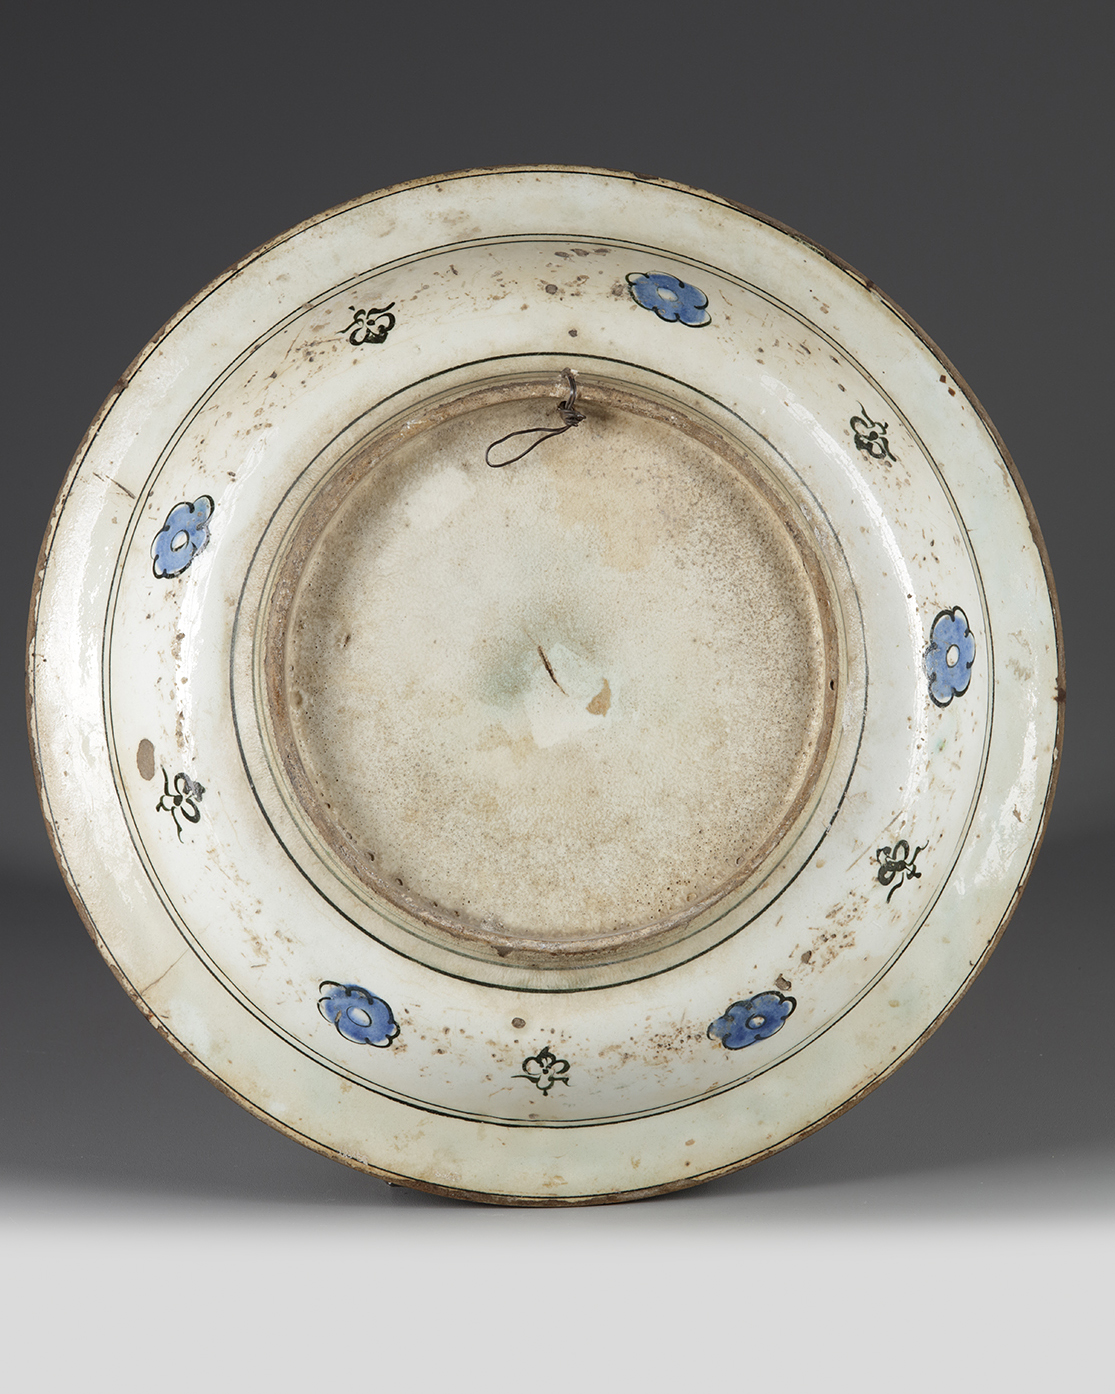 An Ottoman Iznik pottery dish - Image 2 of 2